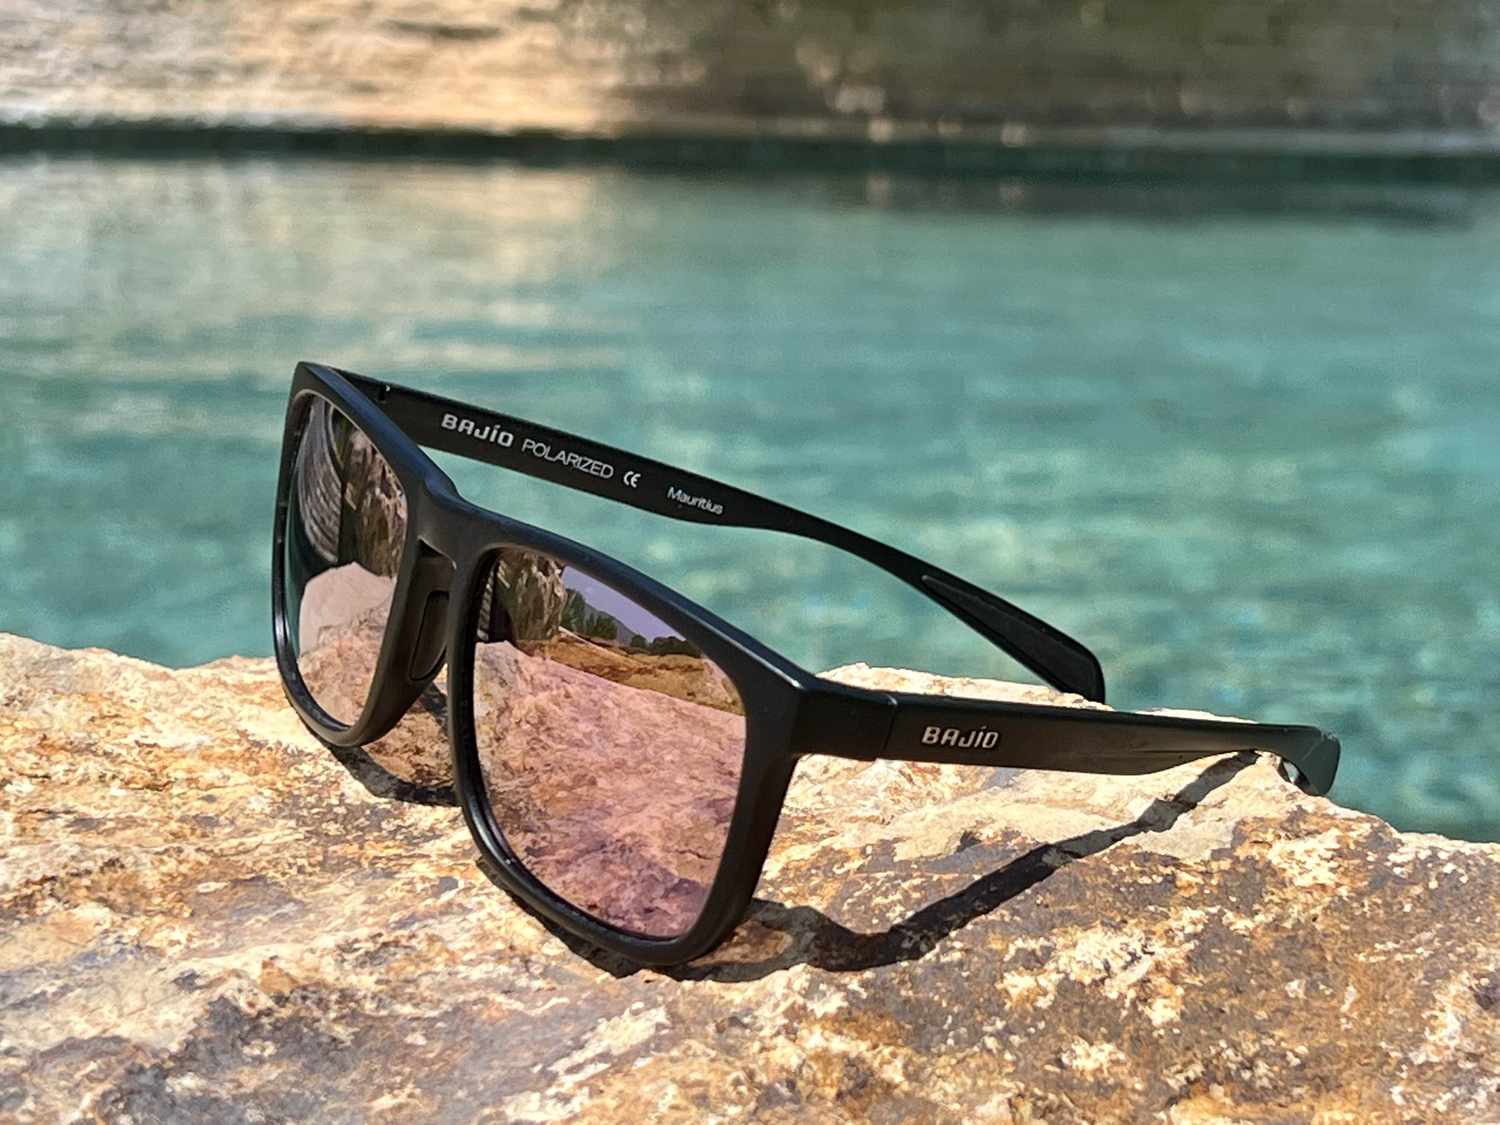 9 Best Fishing Sunglasses 